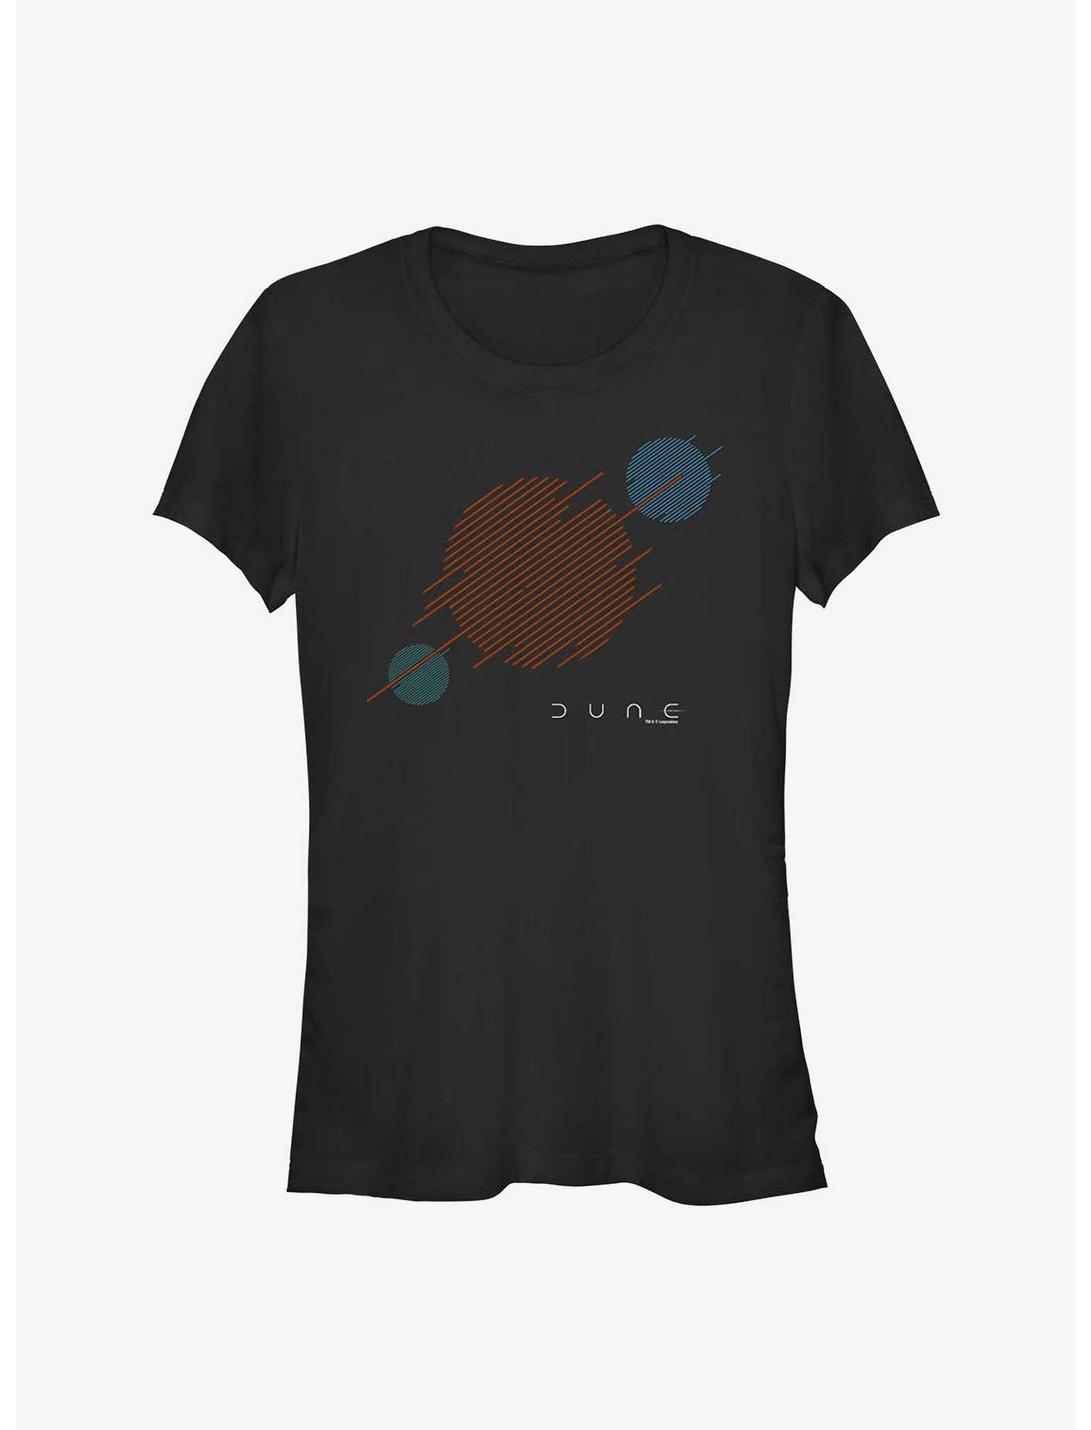 Dune Dune Universe Girls T-Shirt, BLACK, hi-res